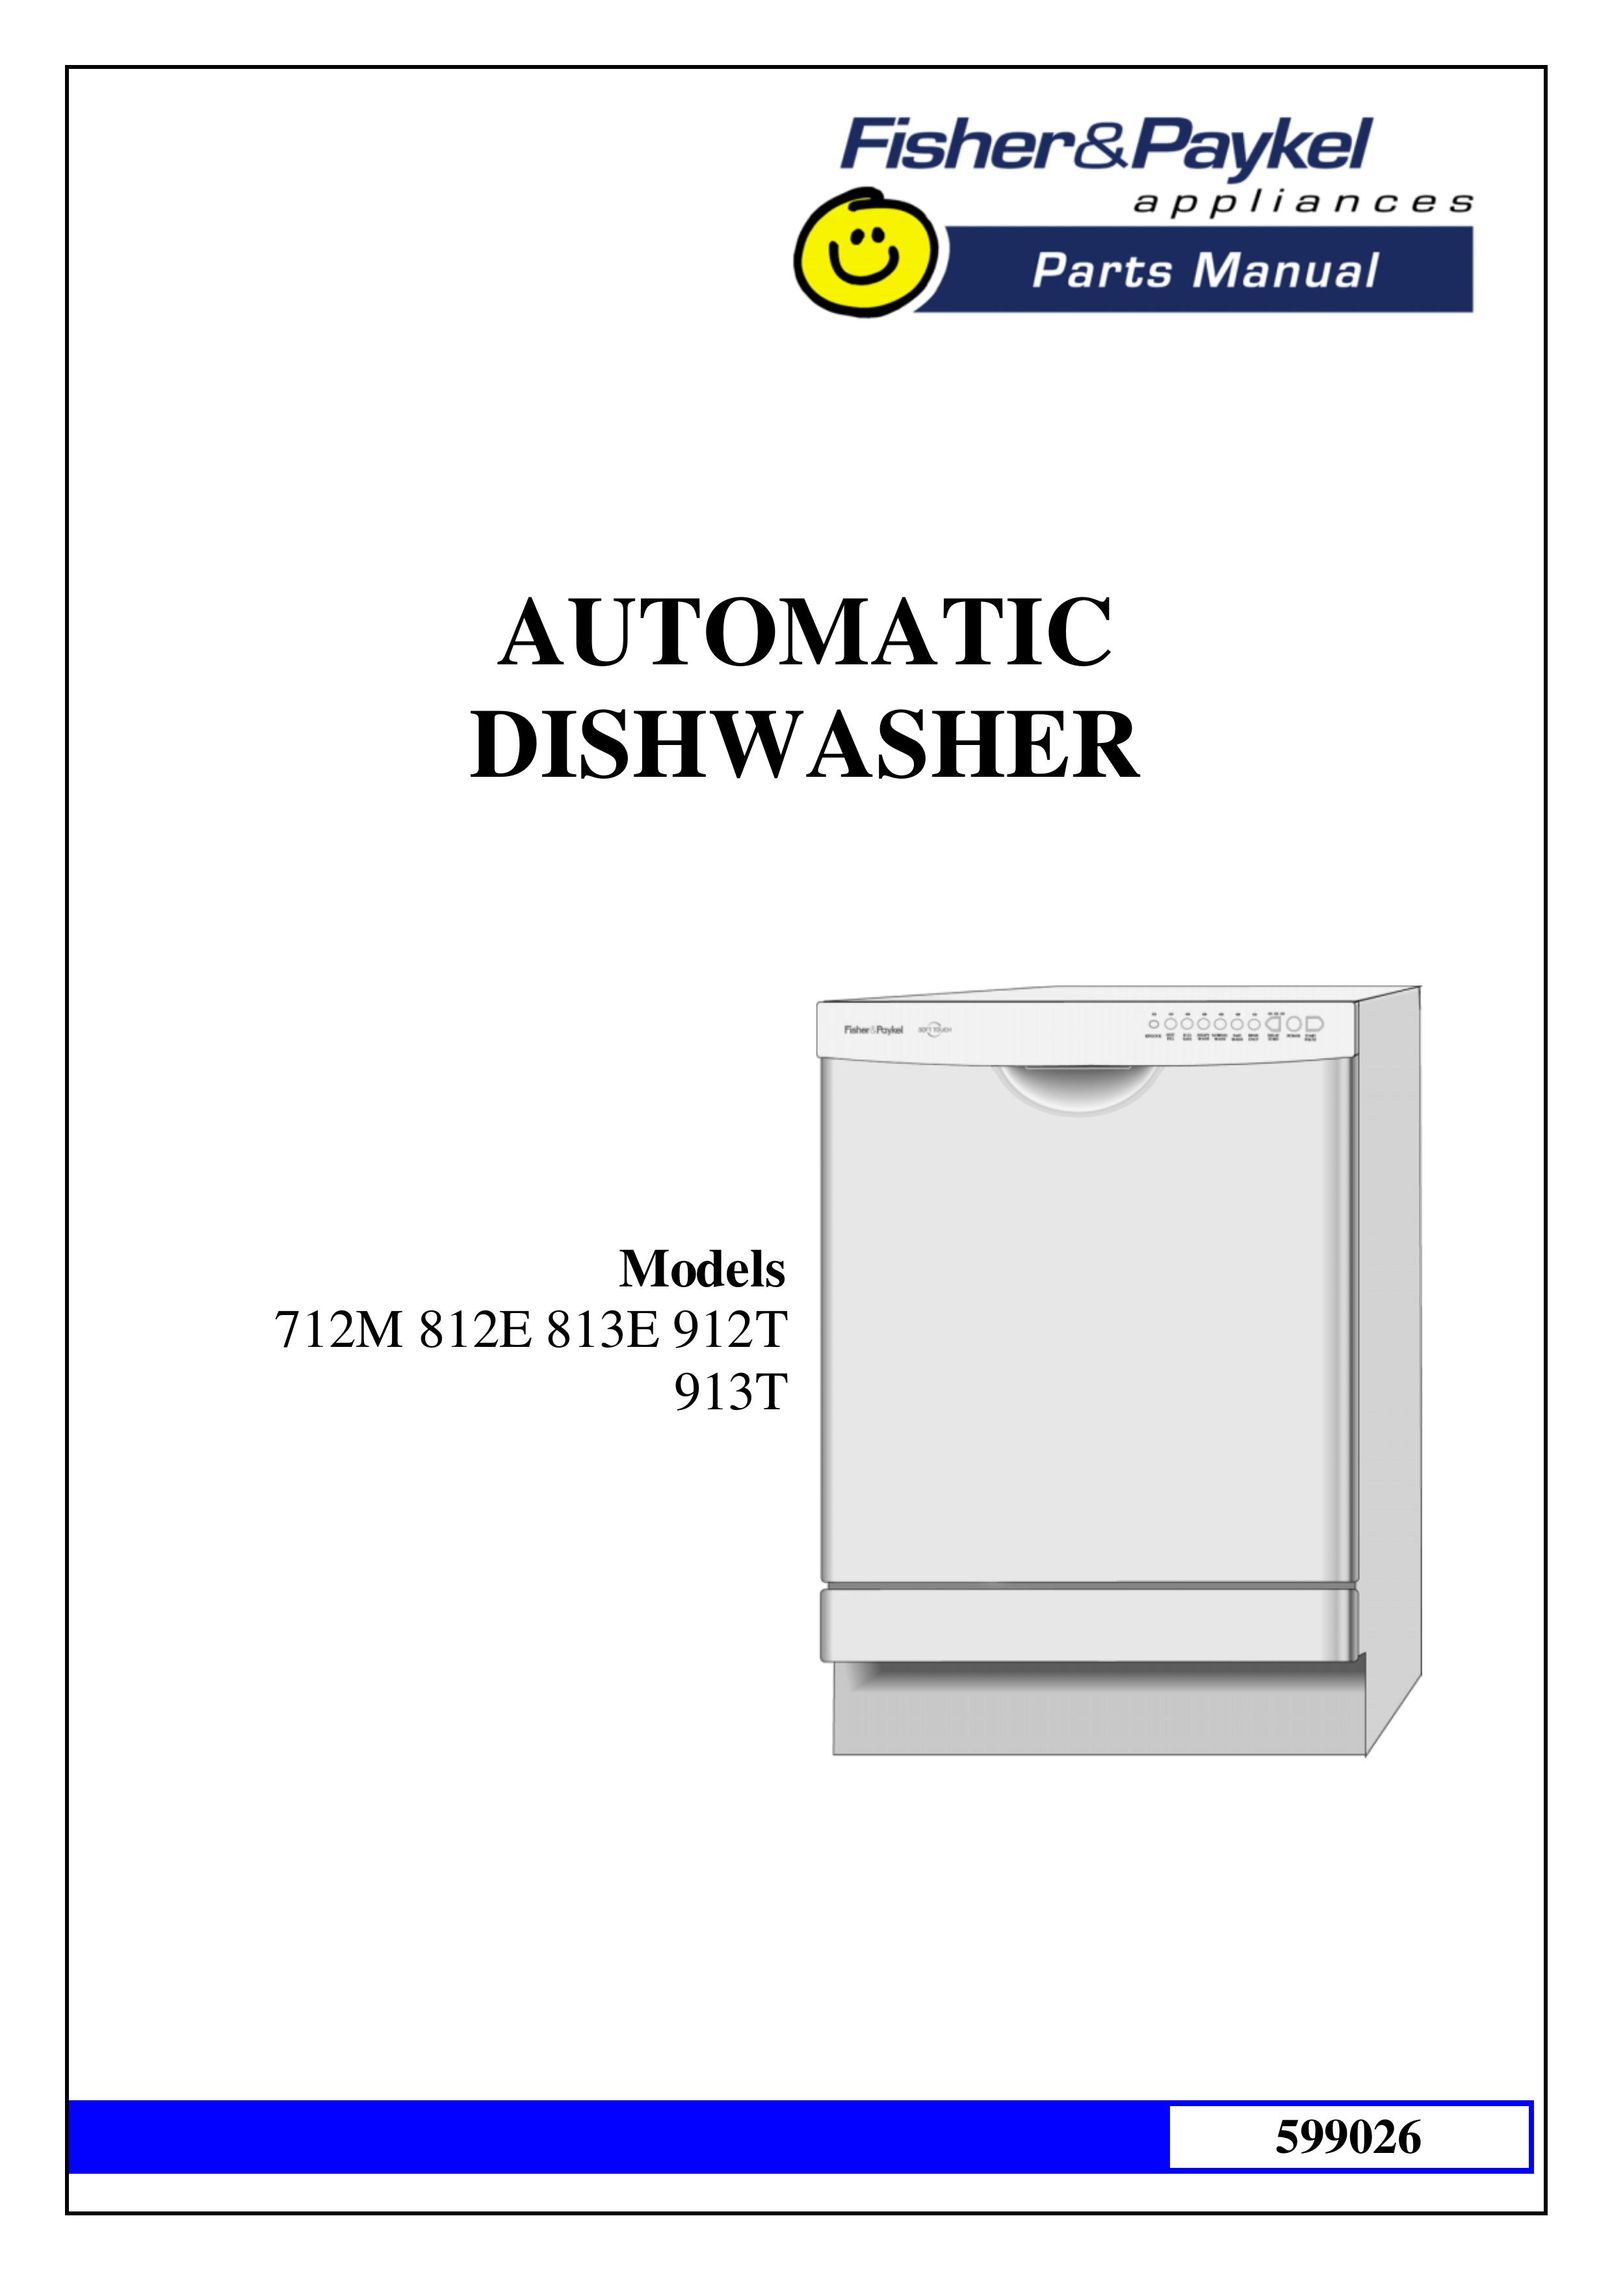 GE 813E Dishwasher User Manual